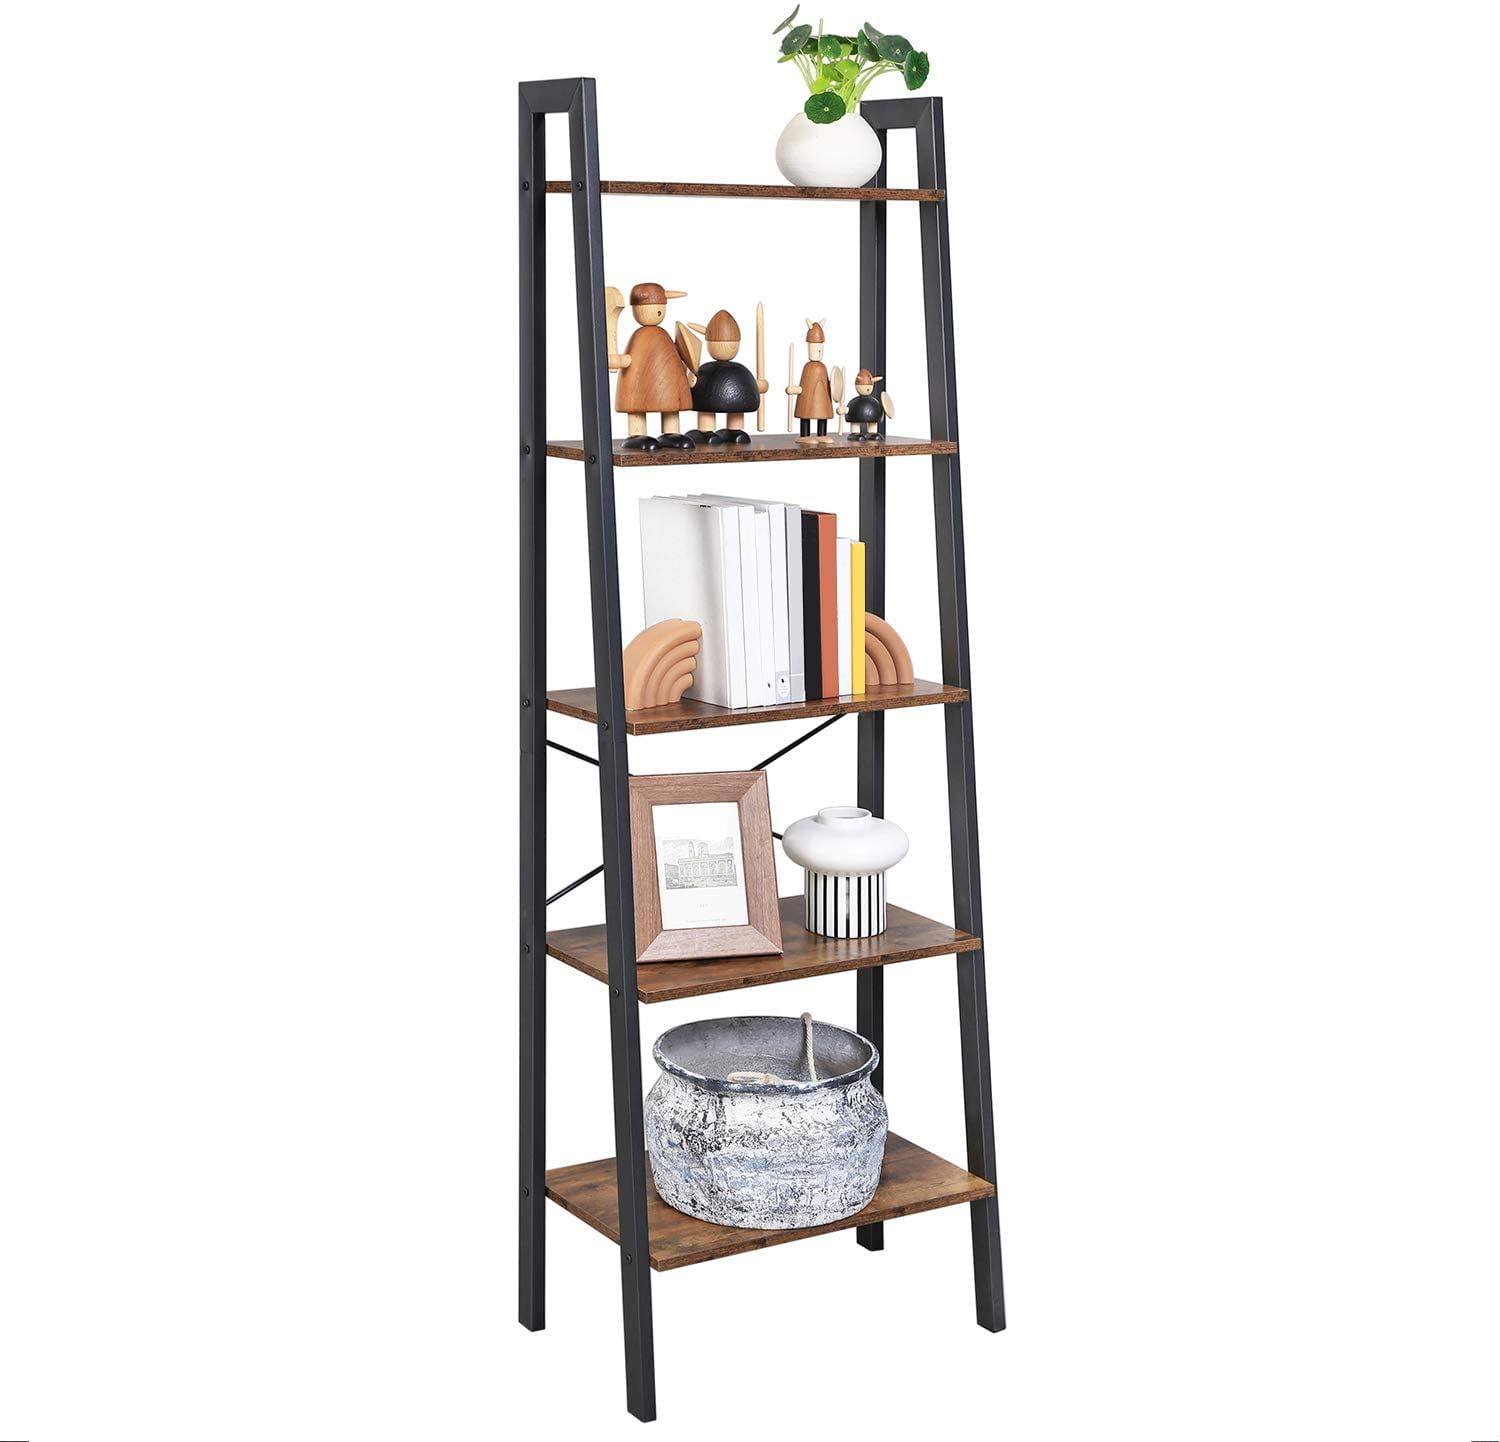 Easy Assembly for Living Room Office VASAGLE Industrial Ladder Shelf Iron Frame Cube Storage Organizer Unit DIY Bookshelf Plant Shelf Rustic Brown ULLS33BX